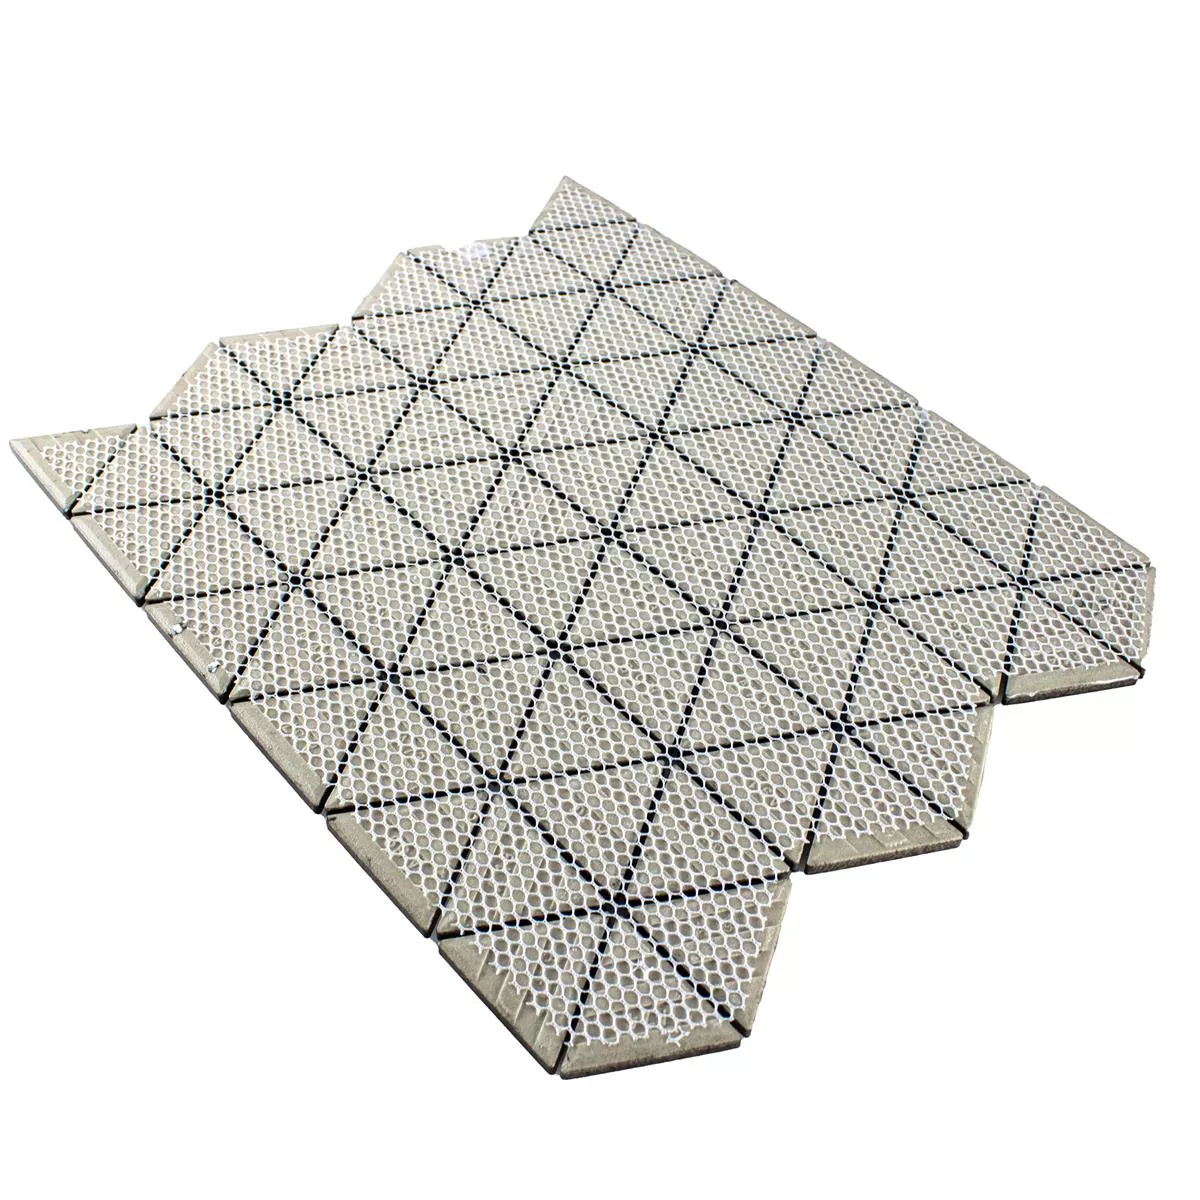 Ceramic Mosaic Tiles Arvada Triangle Blanc Mat